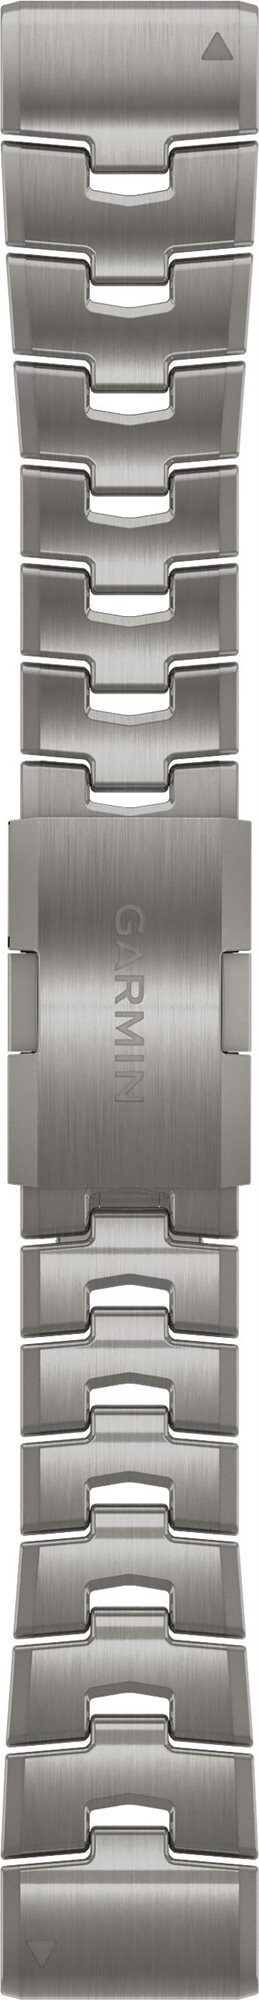 Garmin QuickFit 26 titán - ezüst